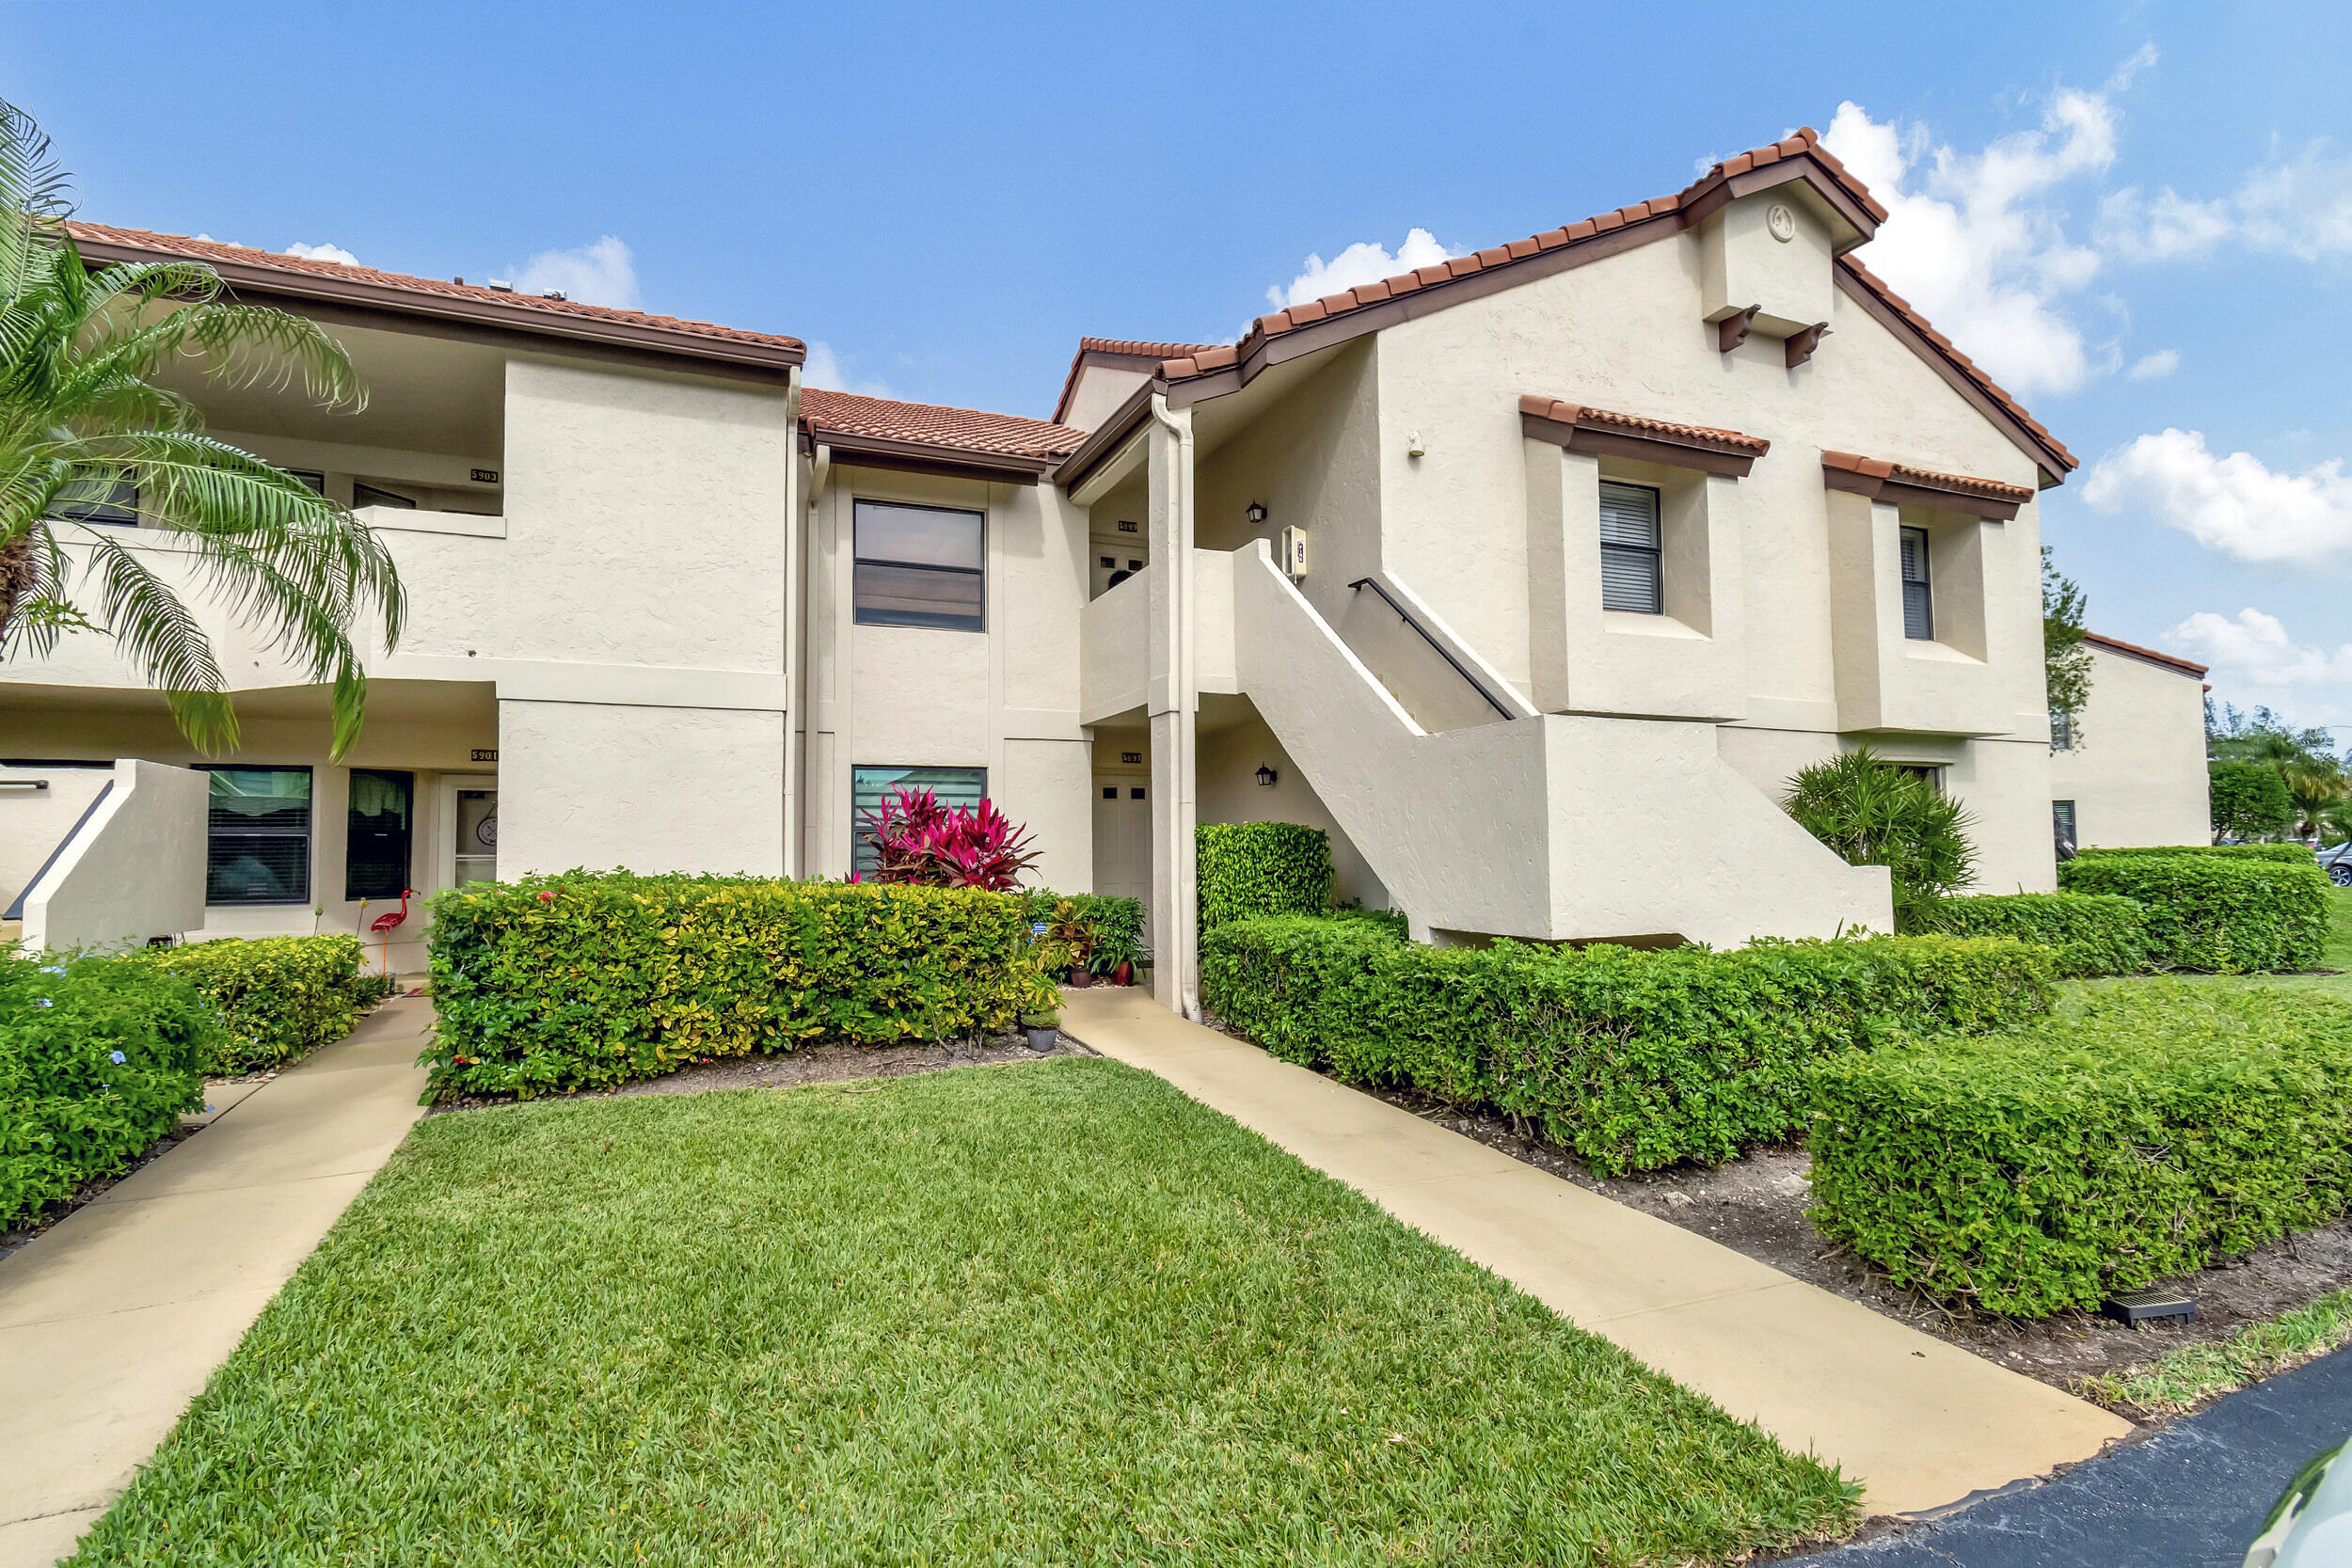 Property for Sale at 5897 Parkwalk Drive, Boynton Beach, Palm Beach County, Florida - Bedrooms: 3 
Bathrooms: 2  - $285,000